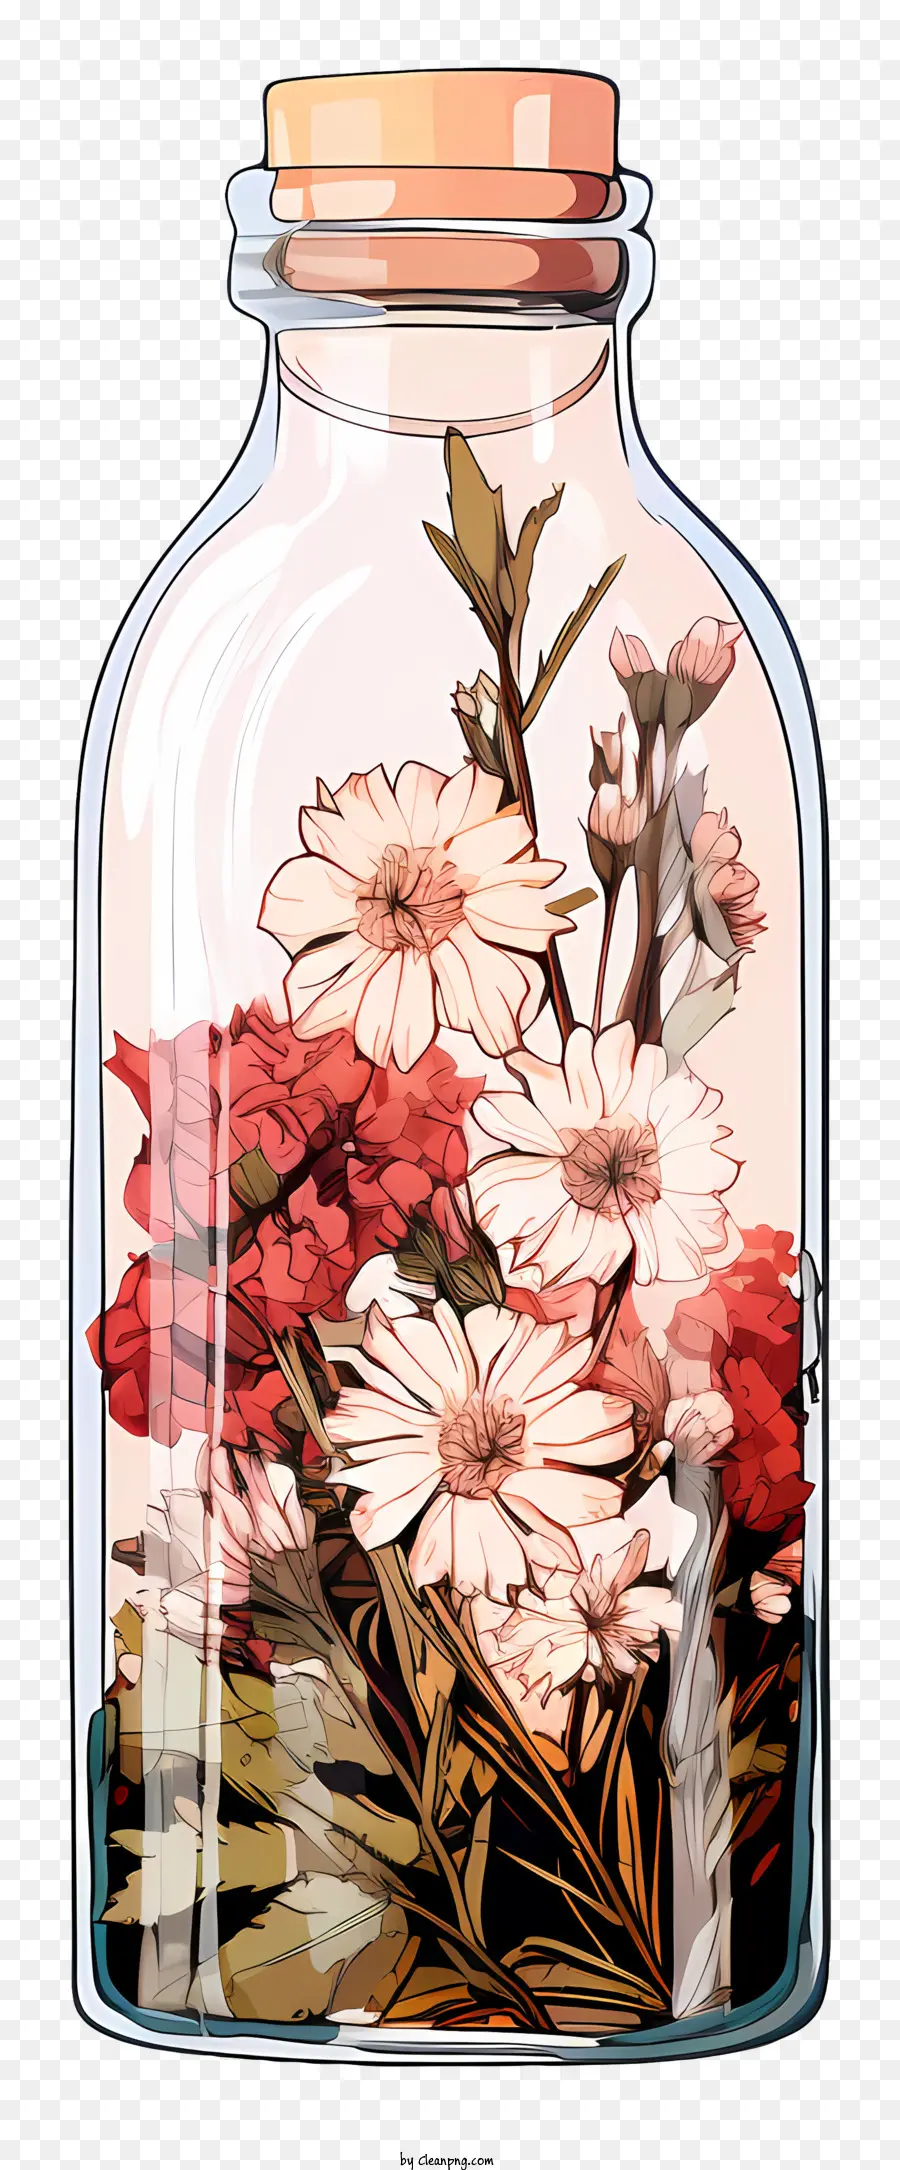 dry flower glass glass jar with flowers floating flowers minimalist floral arrangement flat design flower jar